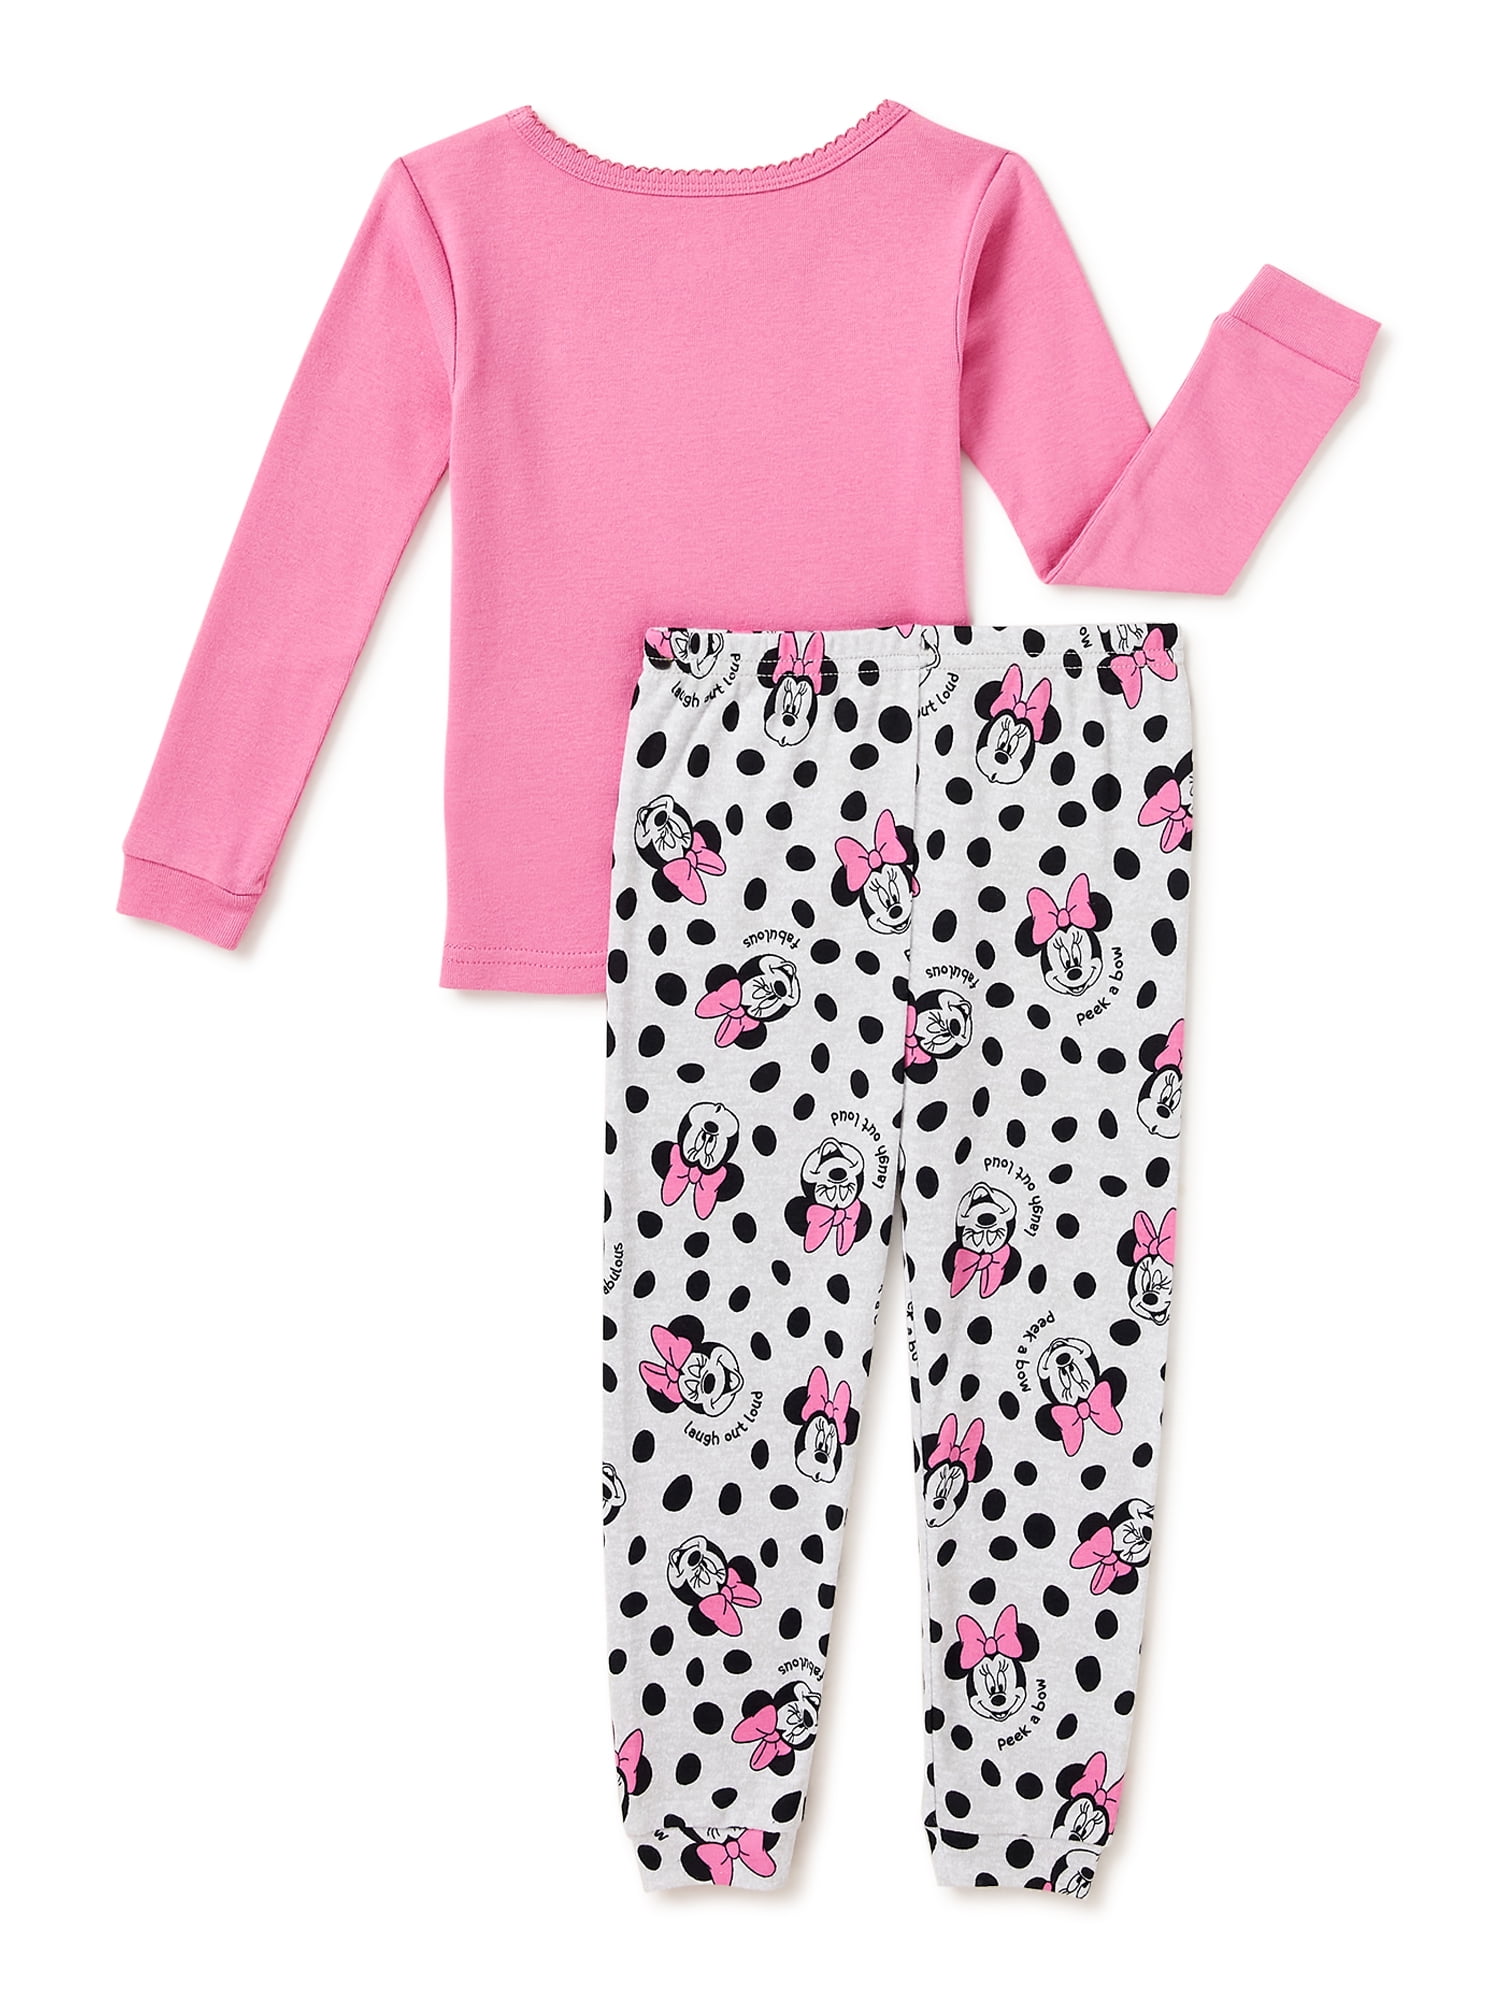 Disney Junior Minnie Mouse Toddler Girls' 4 pc Snug Fit Pajama Set green pink 2T 